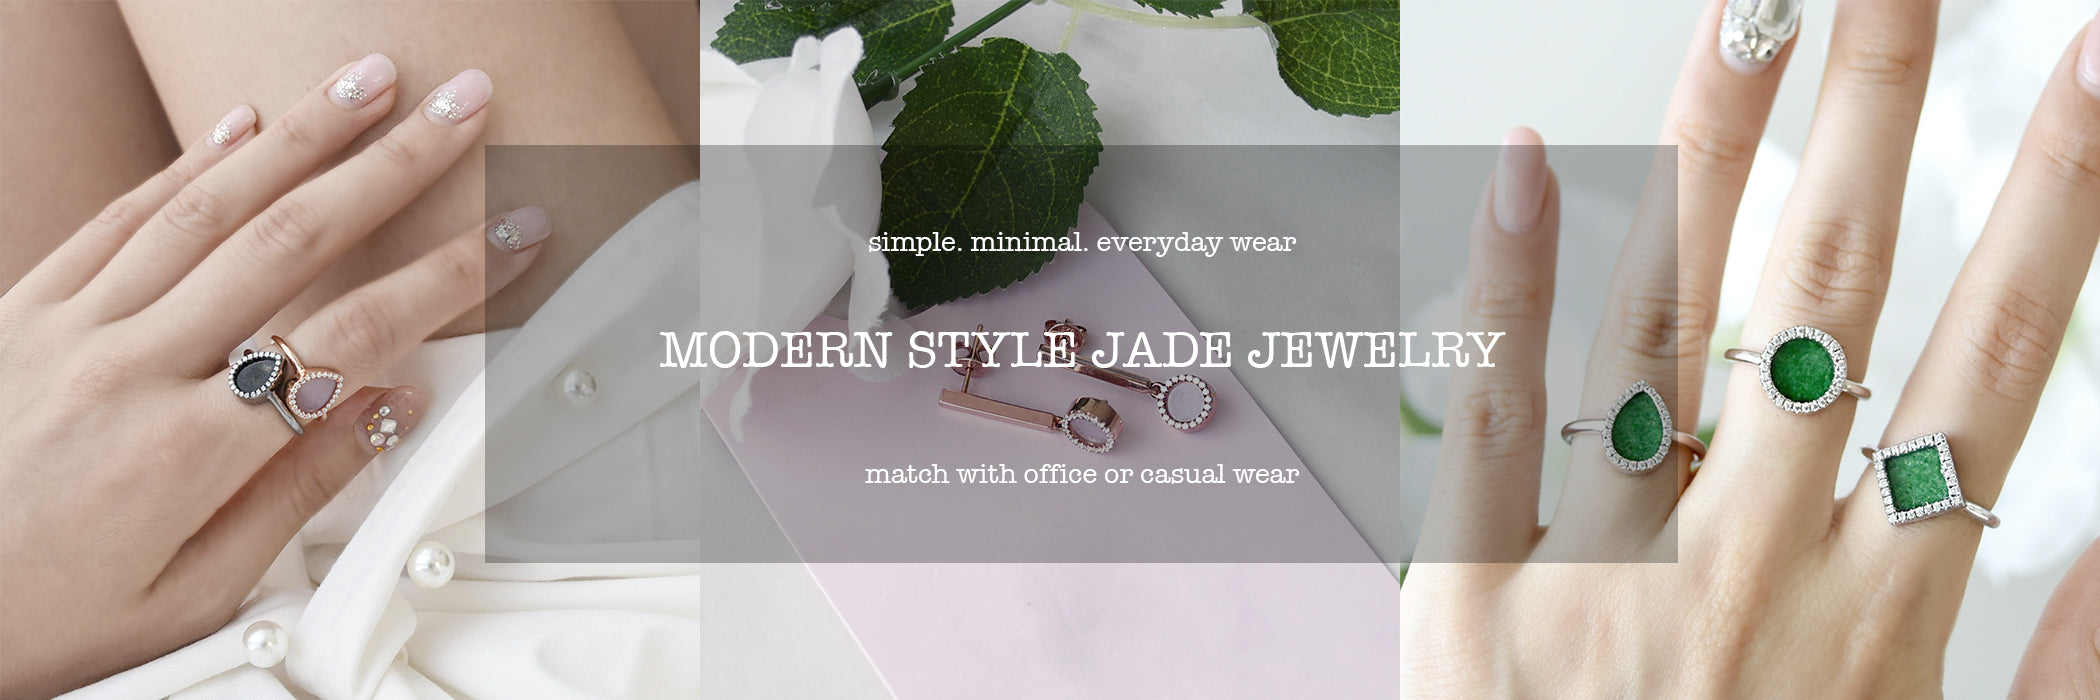 Jadeite Atelier: modern style jade jewelry